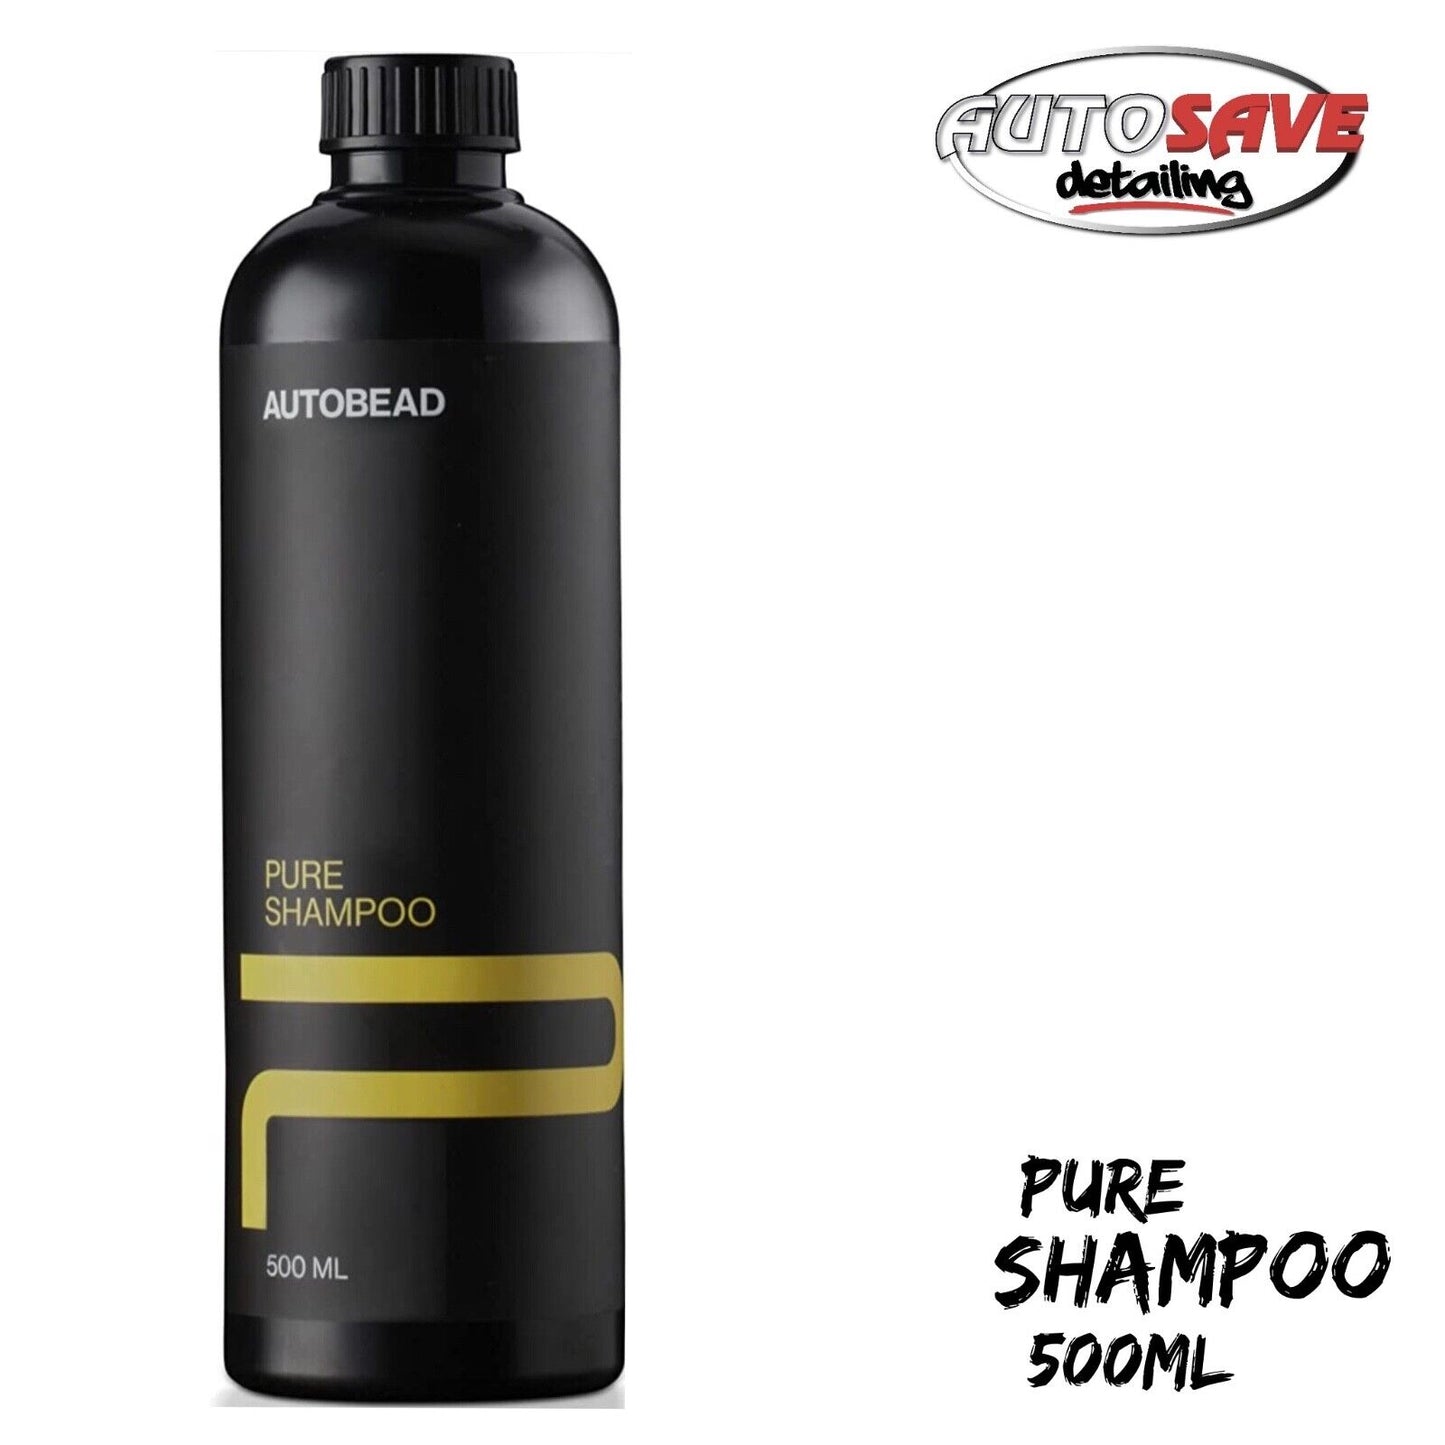 Autobead Pure Shampoo 500ml CONCENTRATED SHAMPOO